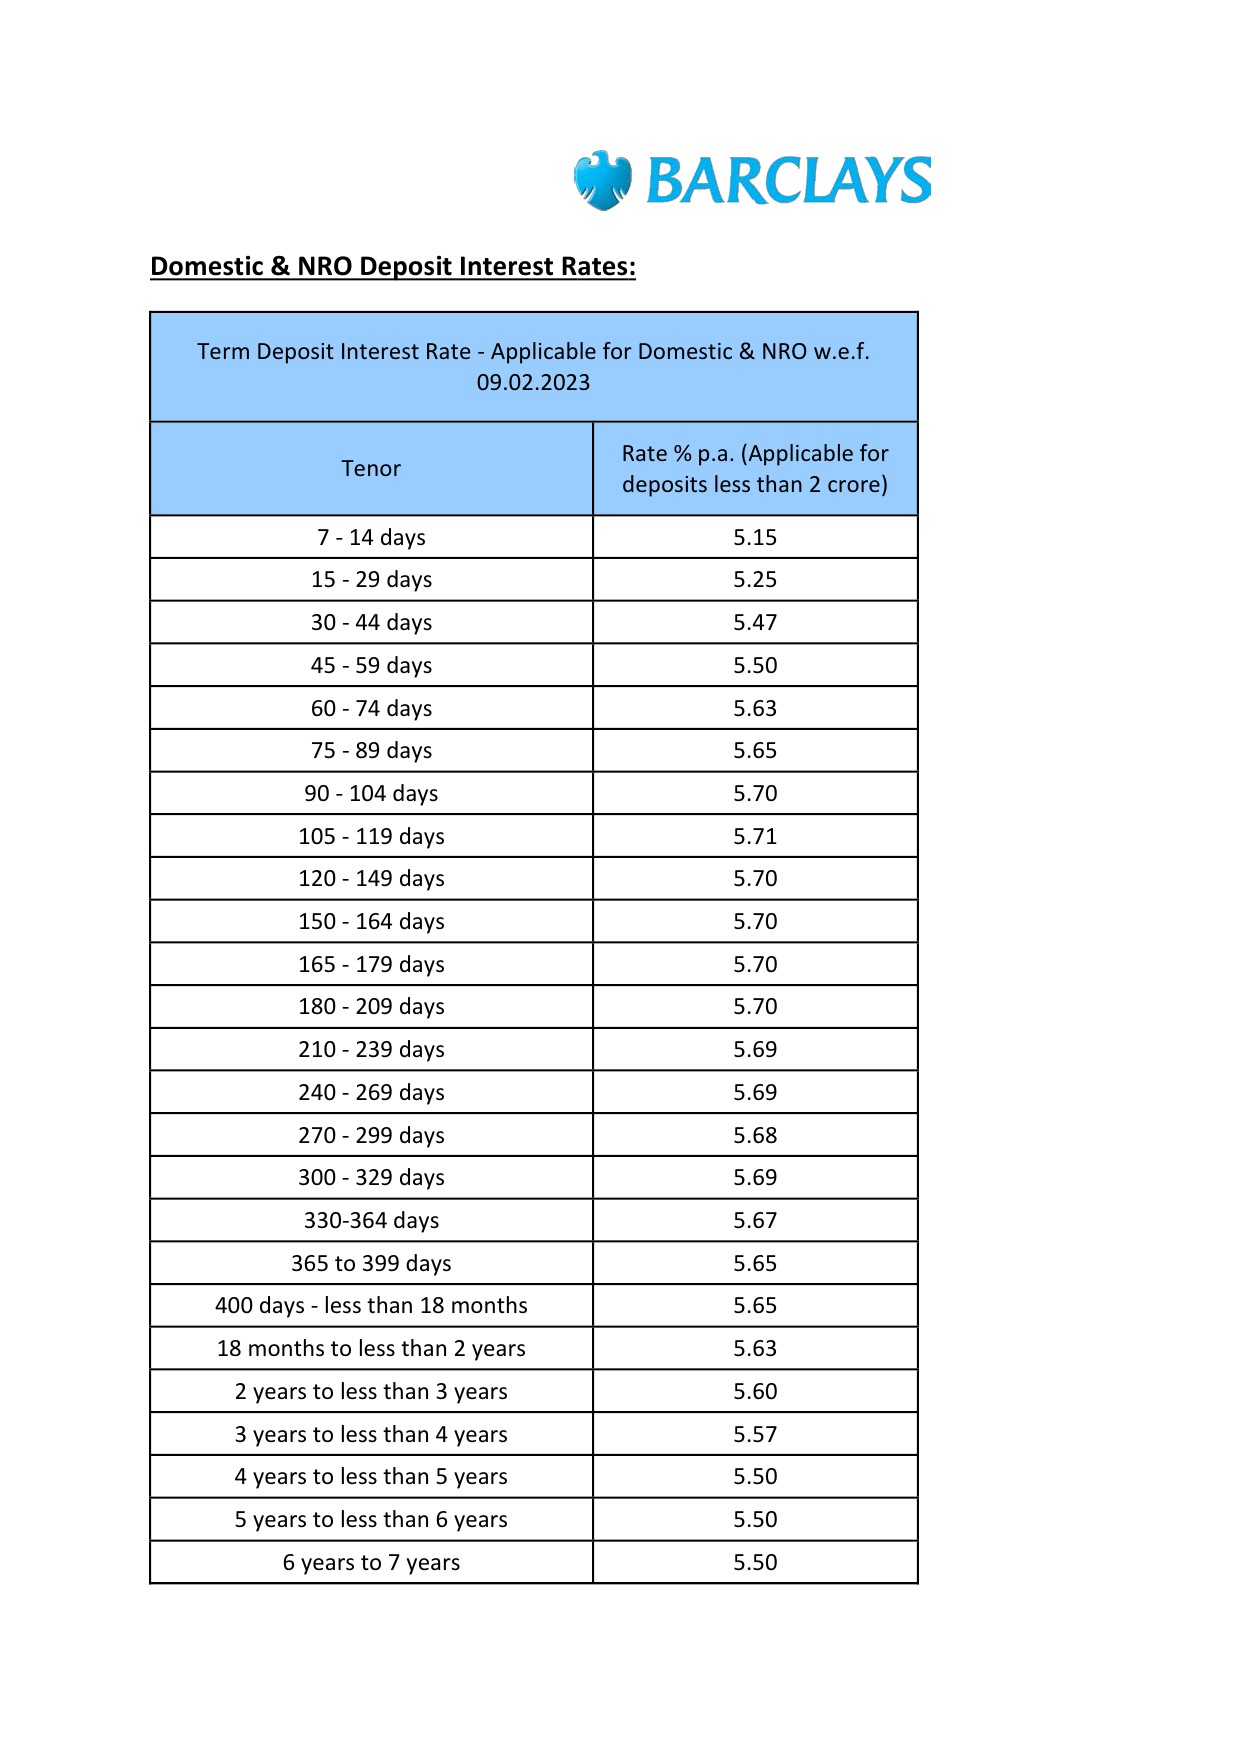 Fixed Deposit Interest Rates of Barclays Bank PLC - Image 1